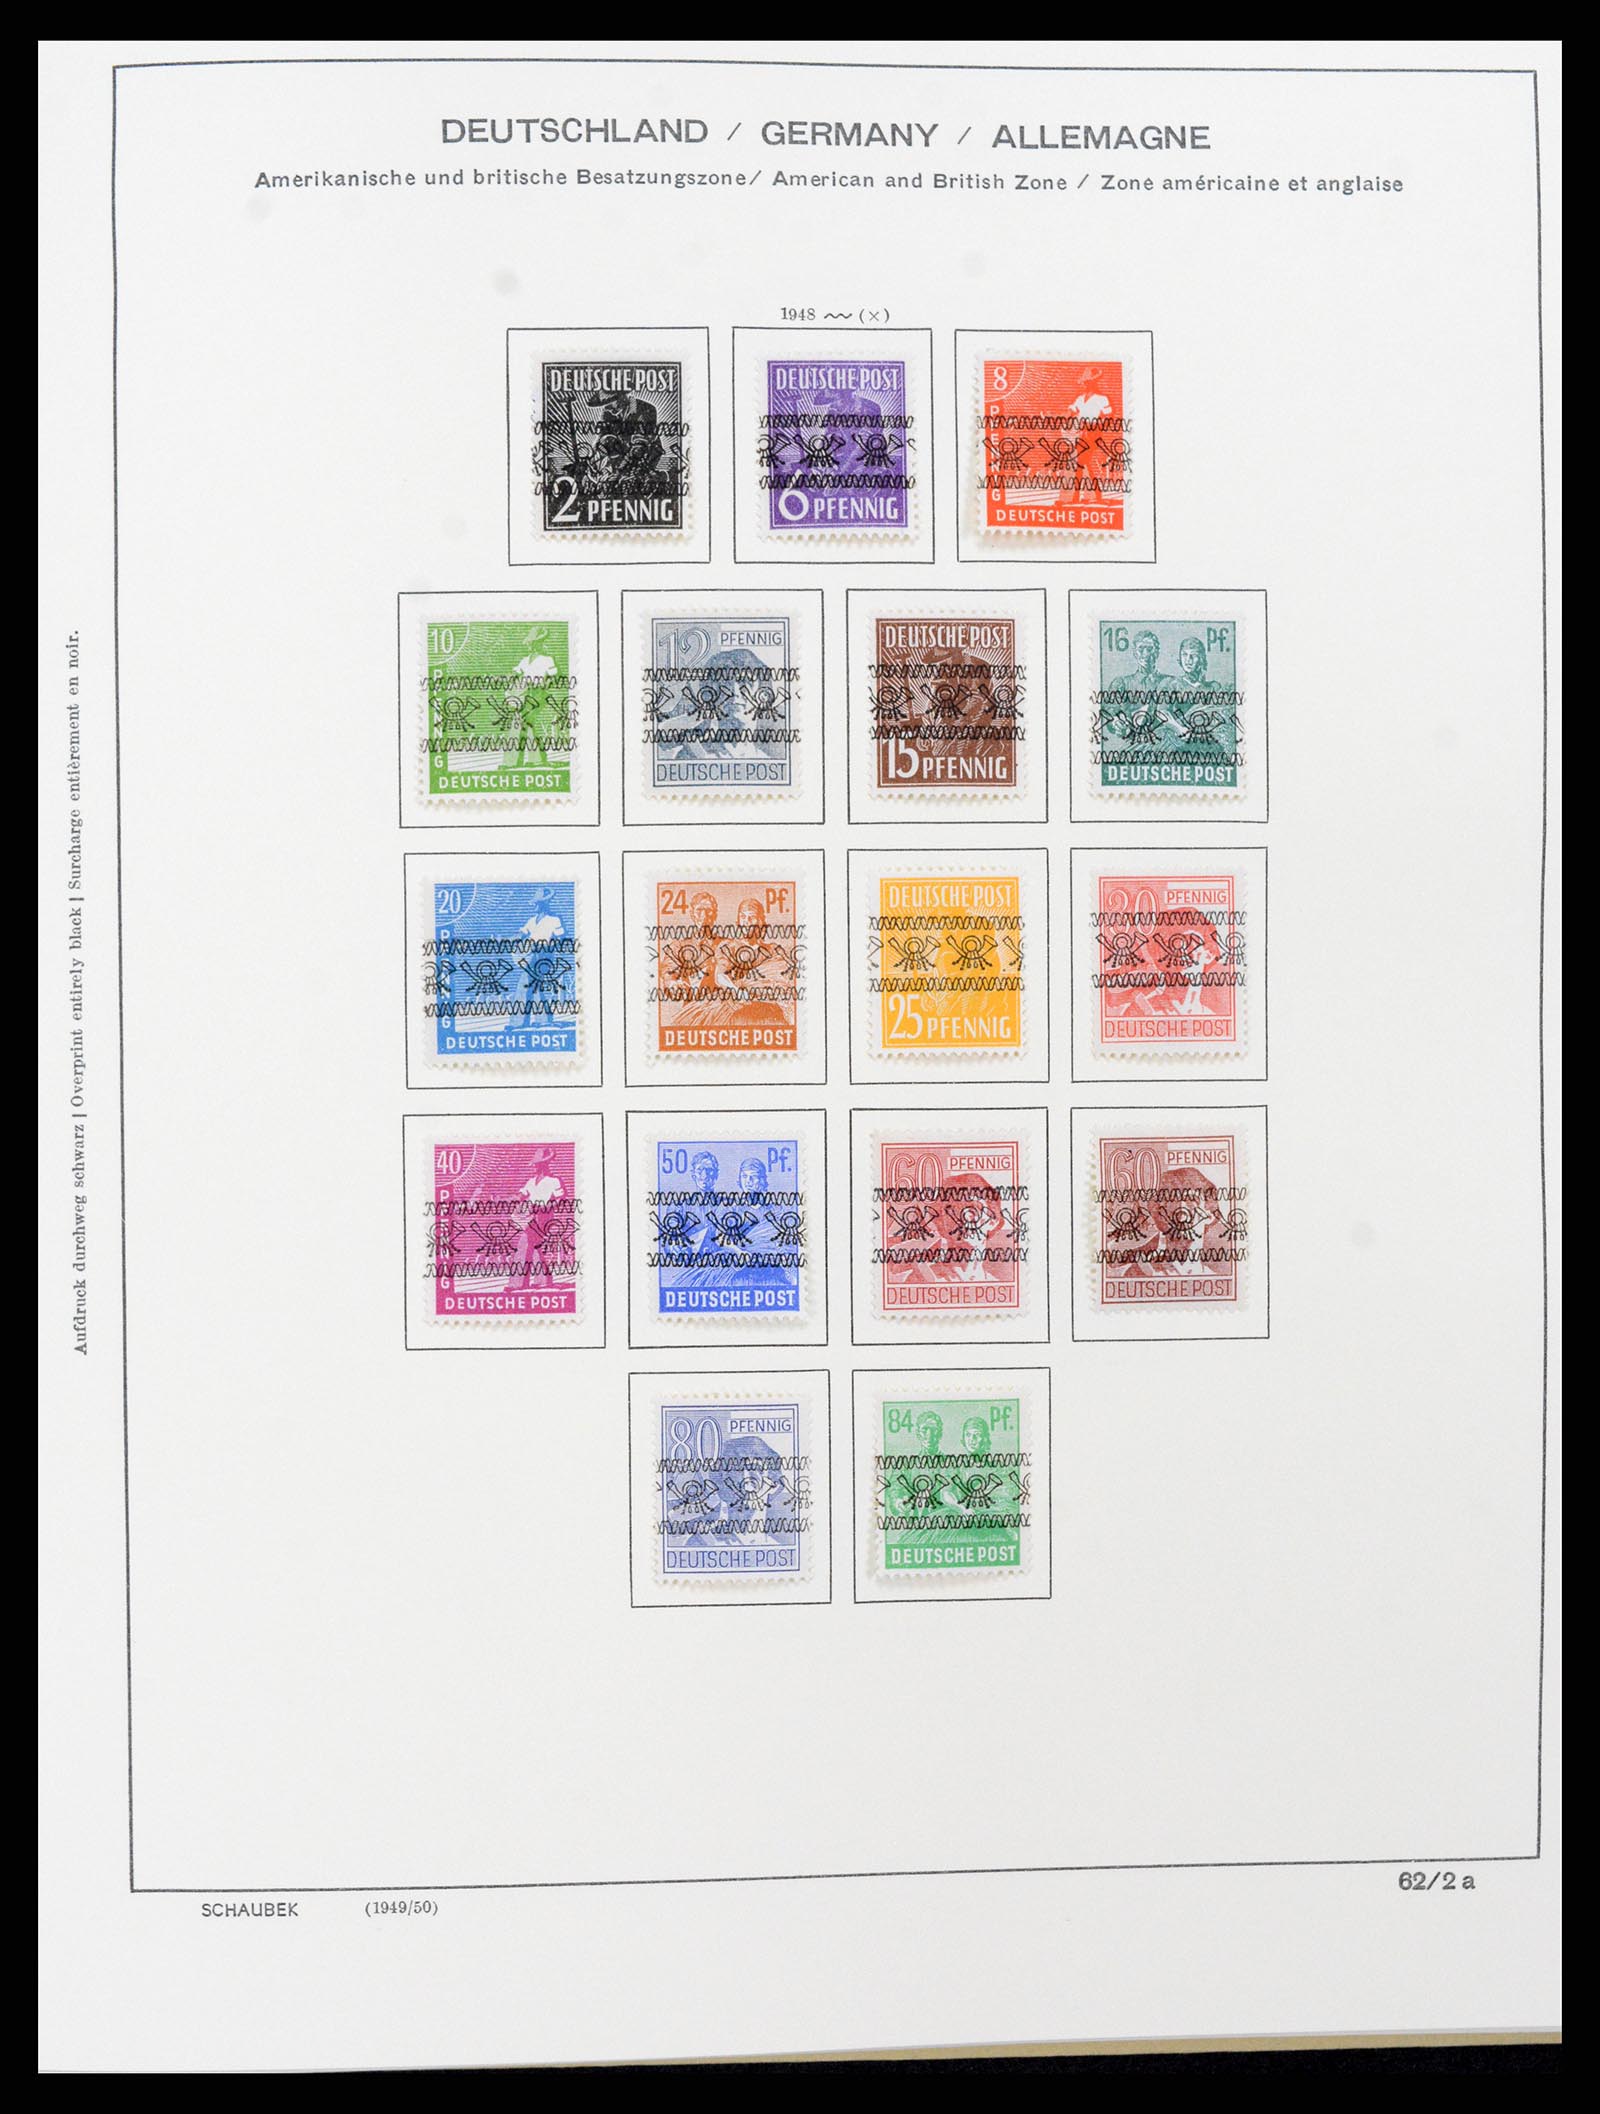 37645 010 - Stamp collection 37645 German Zones 1945-1949.